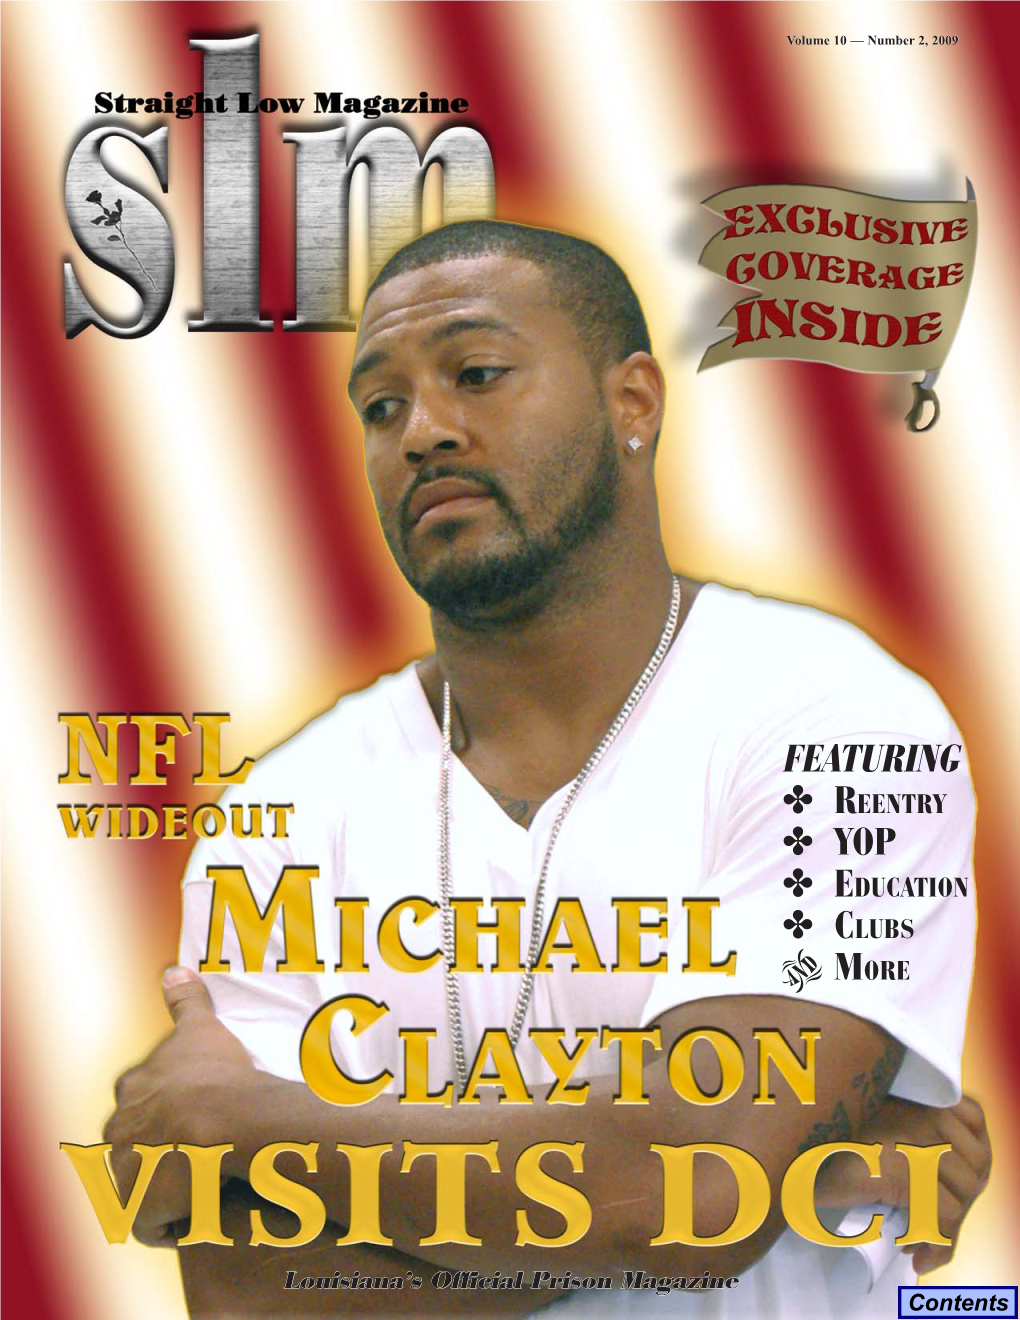 Straight Low Magazine 2009 Volume 10 Number 2